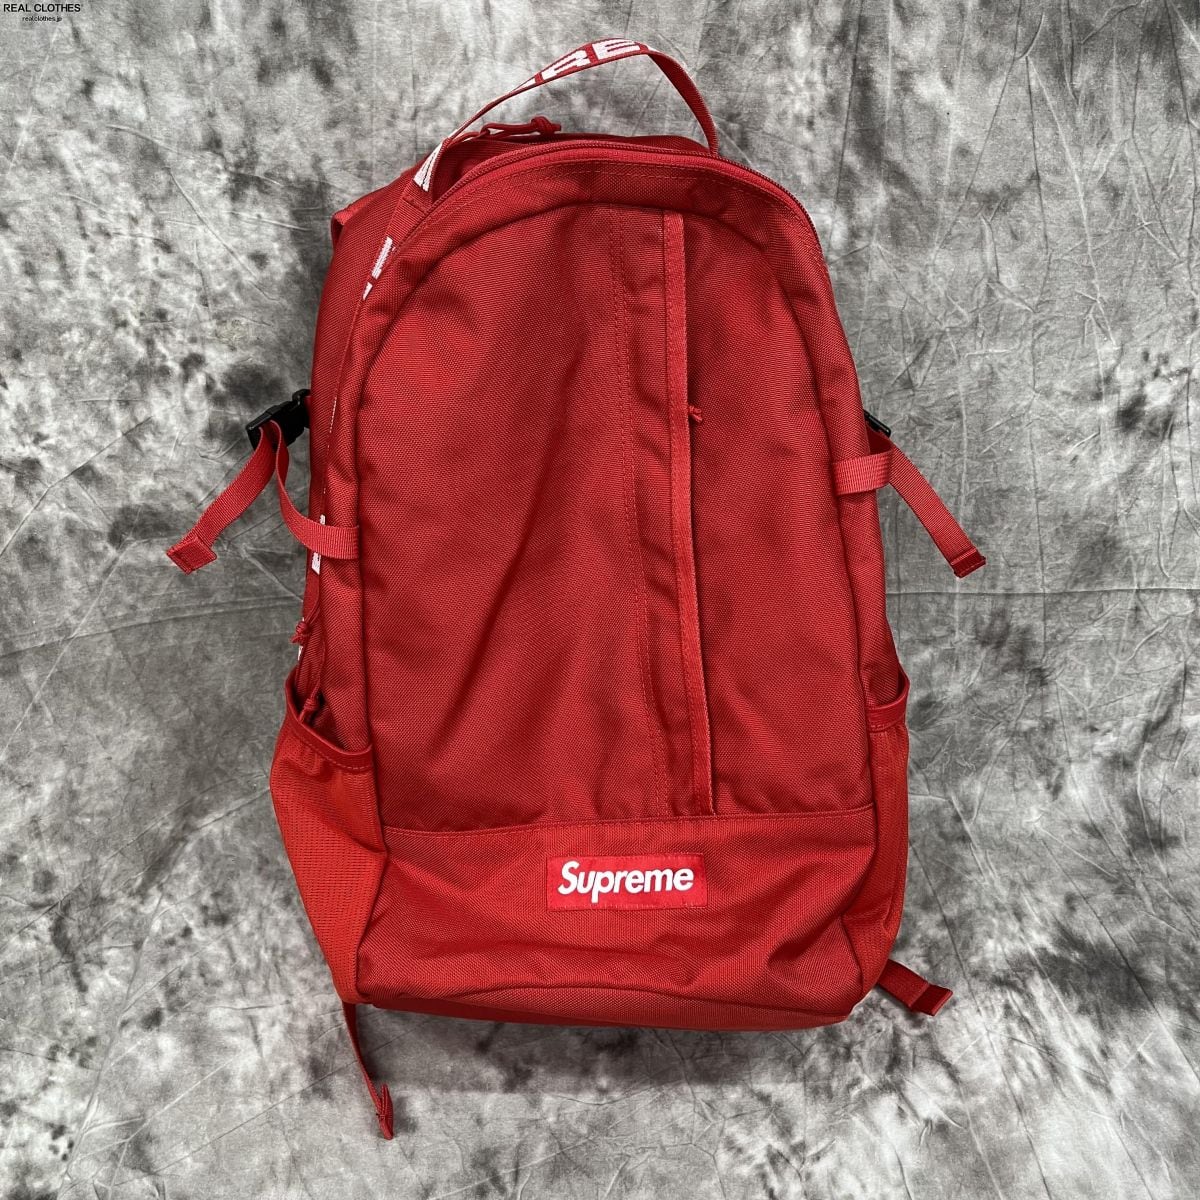 supreme Backpack バックパック 18ss 赤 シュプリーム